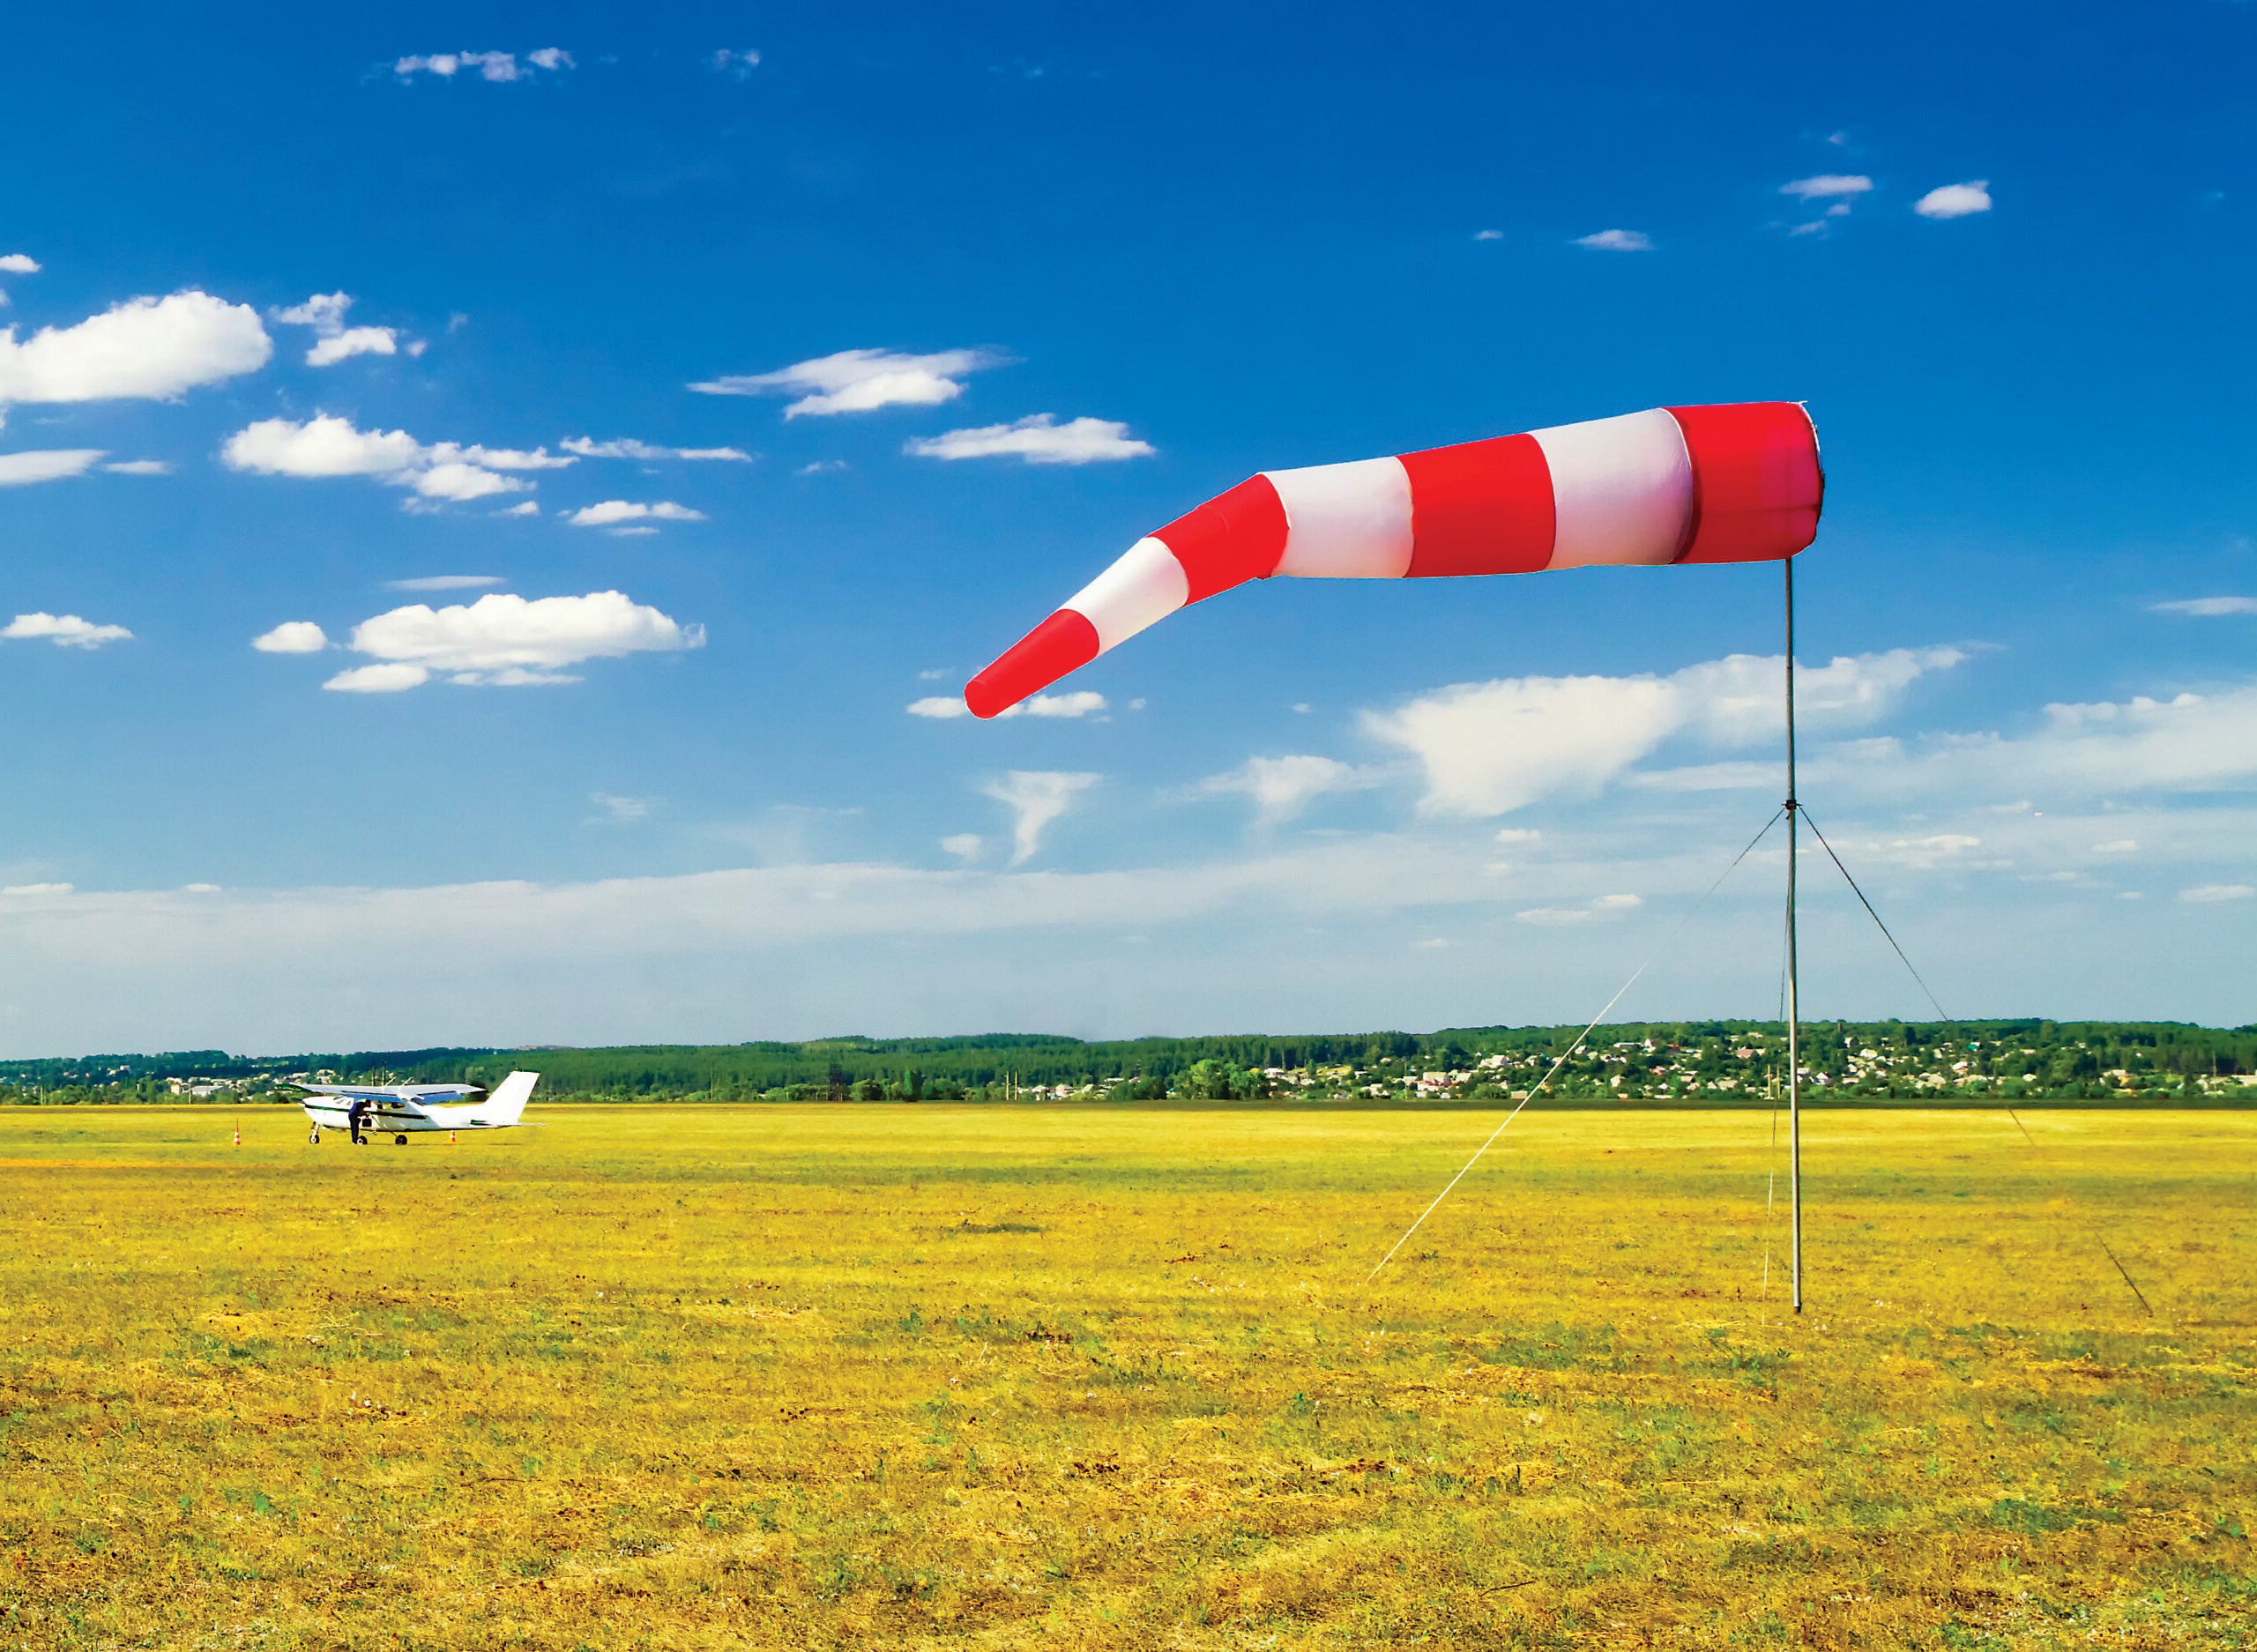 Practice Crosswind Landings Whenever You Can